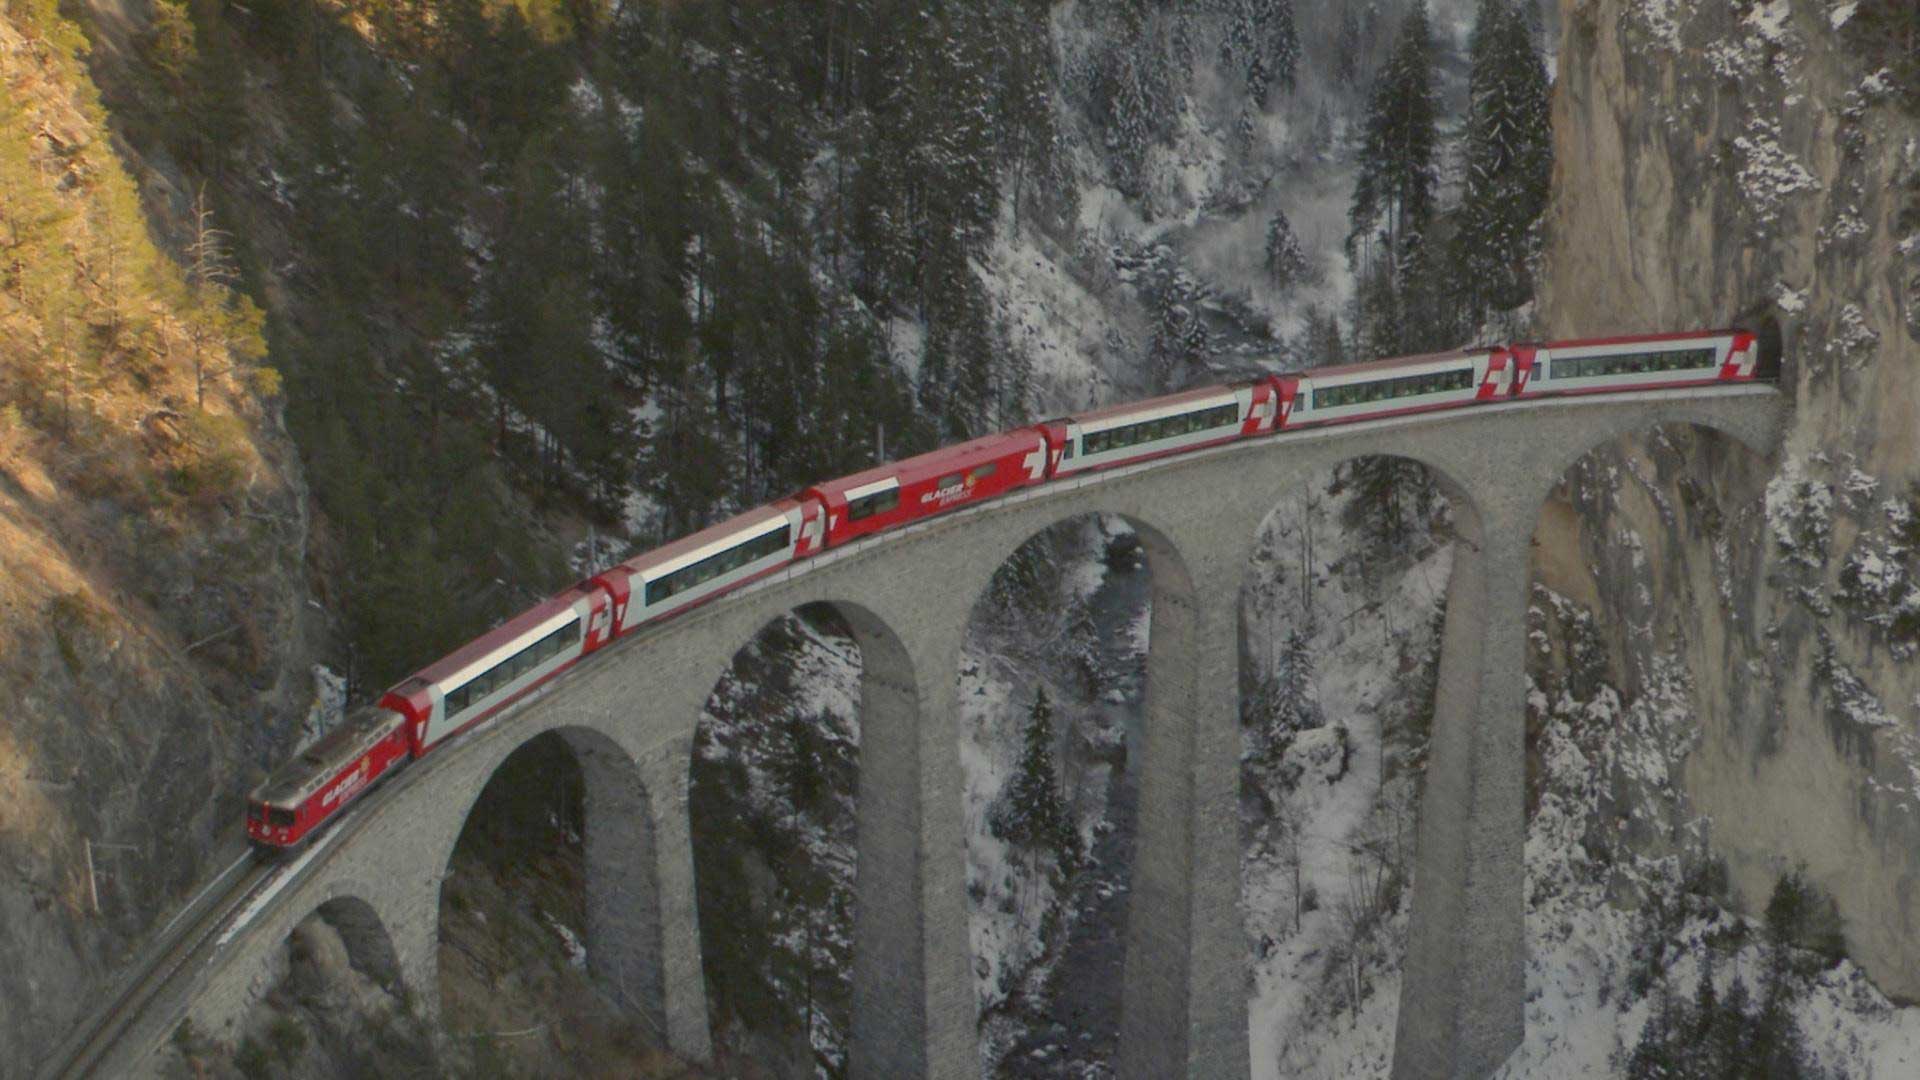 scenic railways from above hero